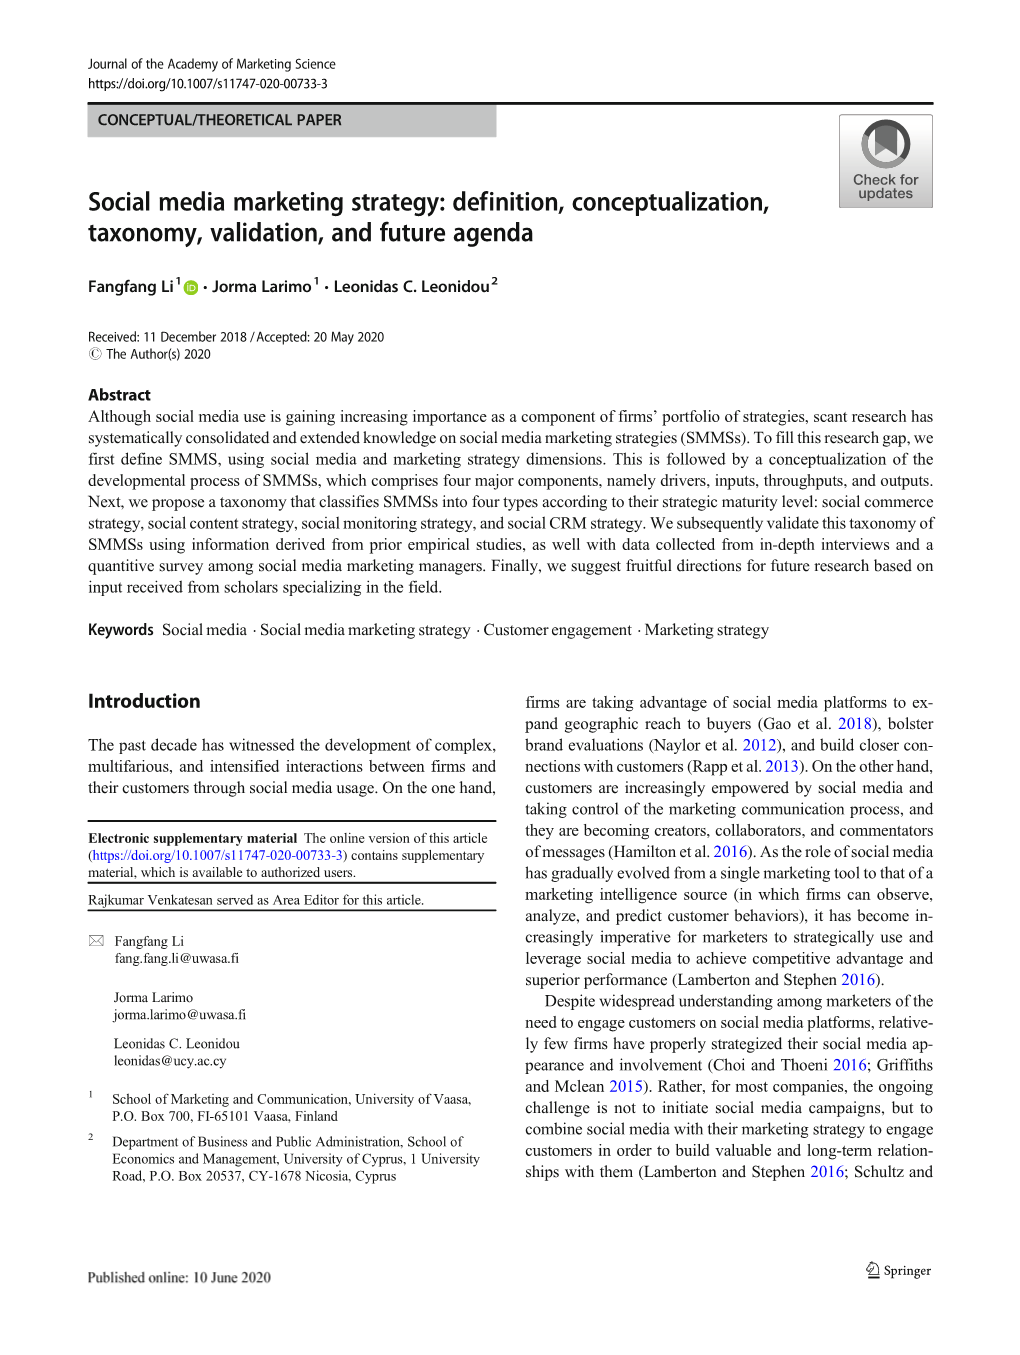 Social Media Marketing Strategy: Definition, Conceptualization, Taxonomy, Validation, and Future Agenda